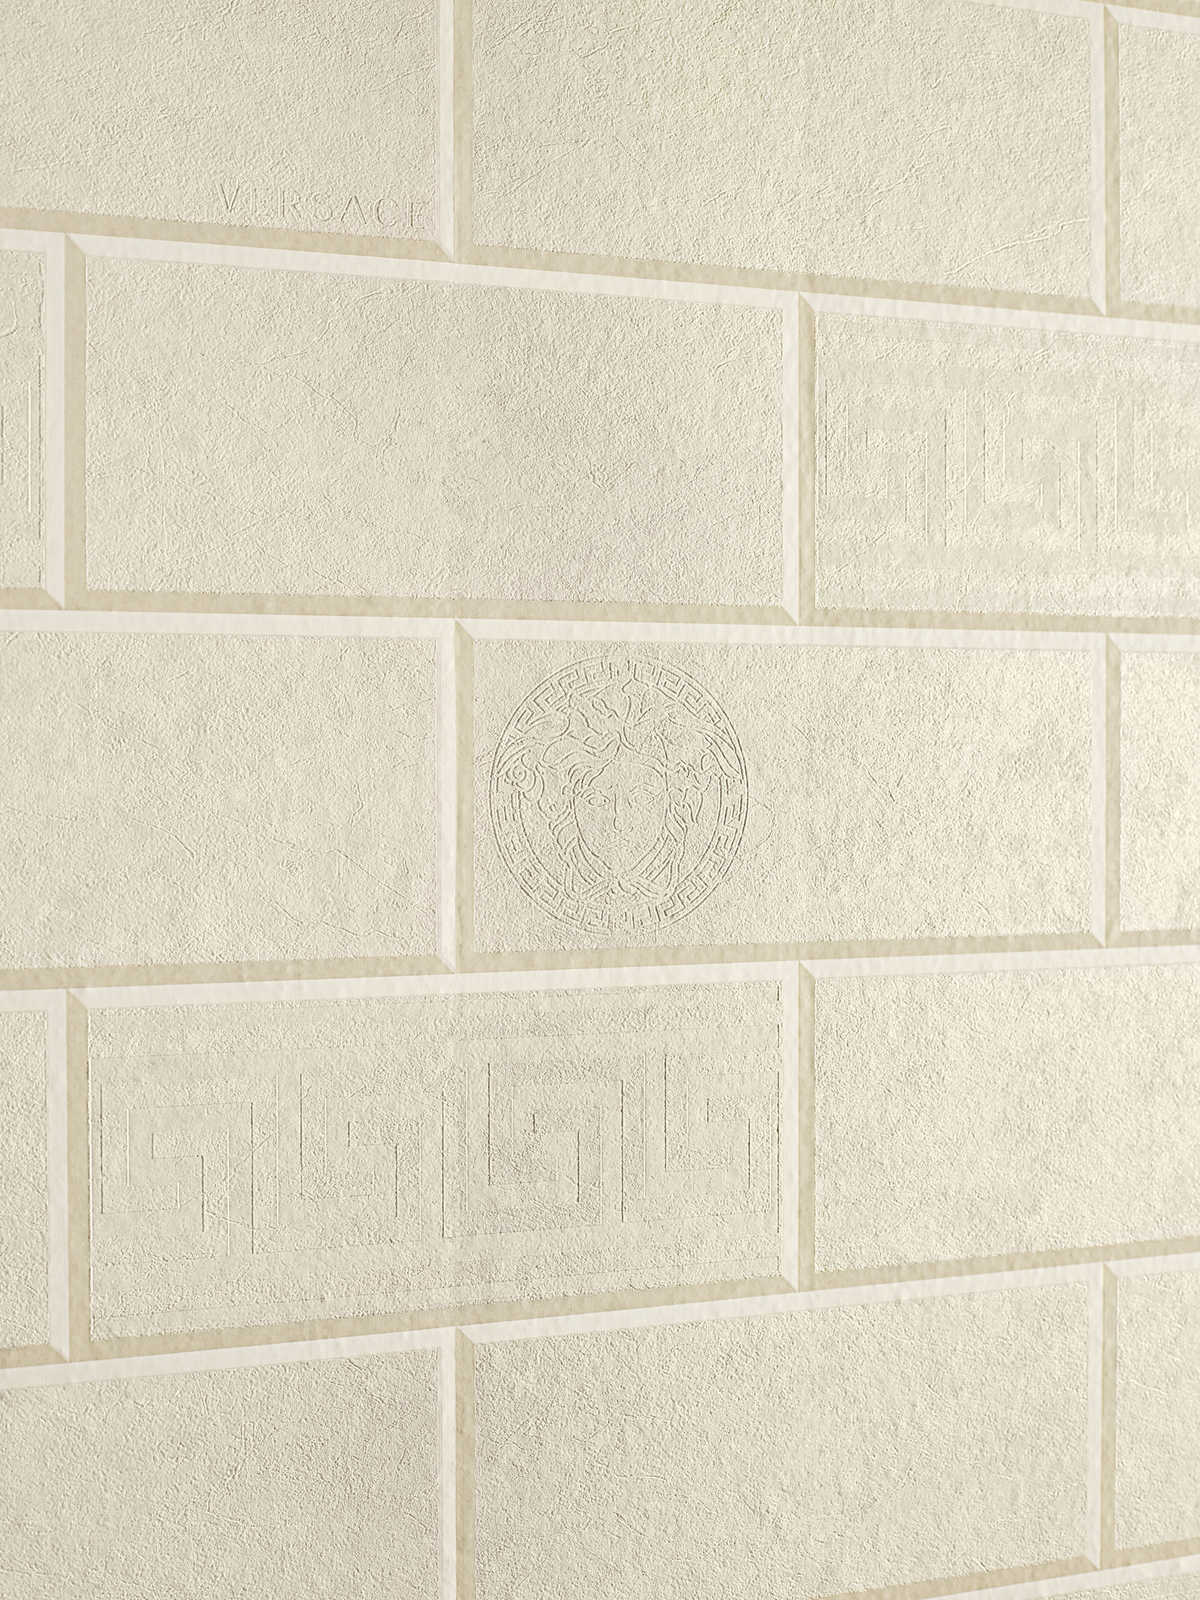             Wallpaper stone look sandstone masonry - beige, cream
        